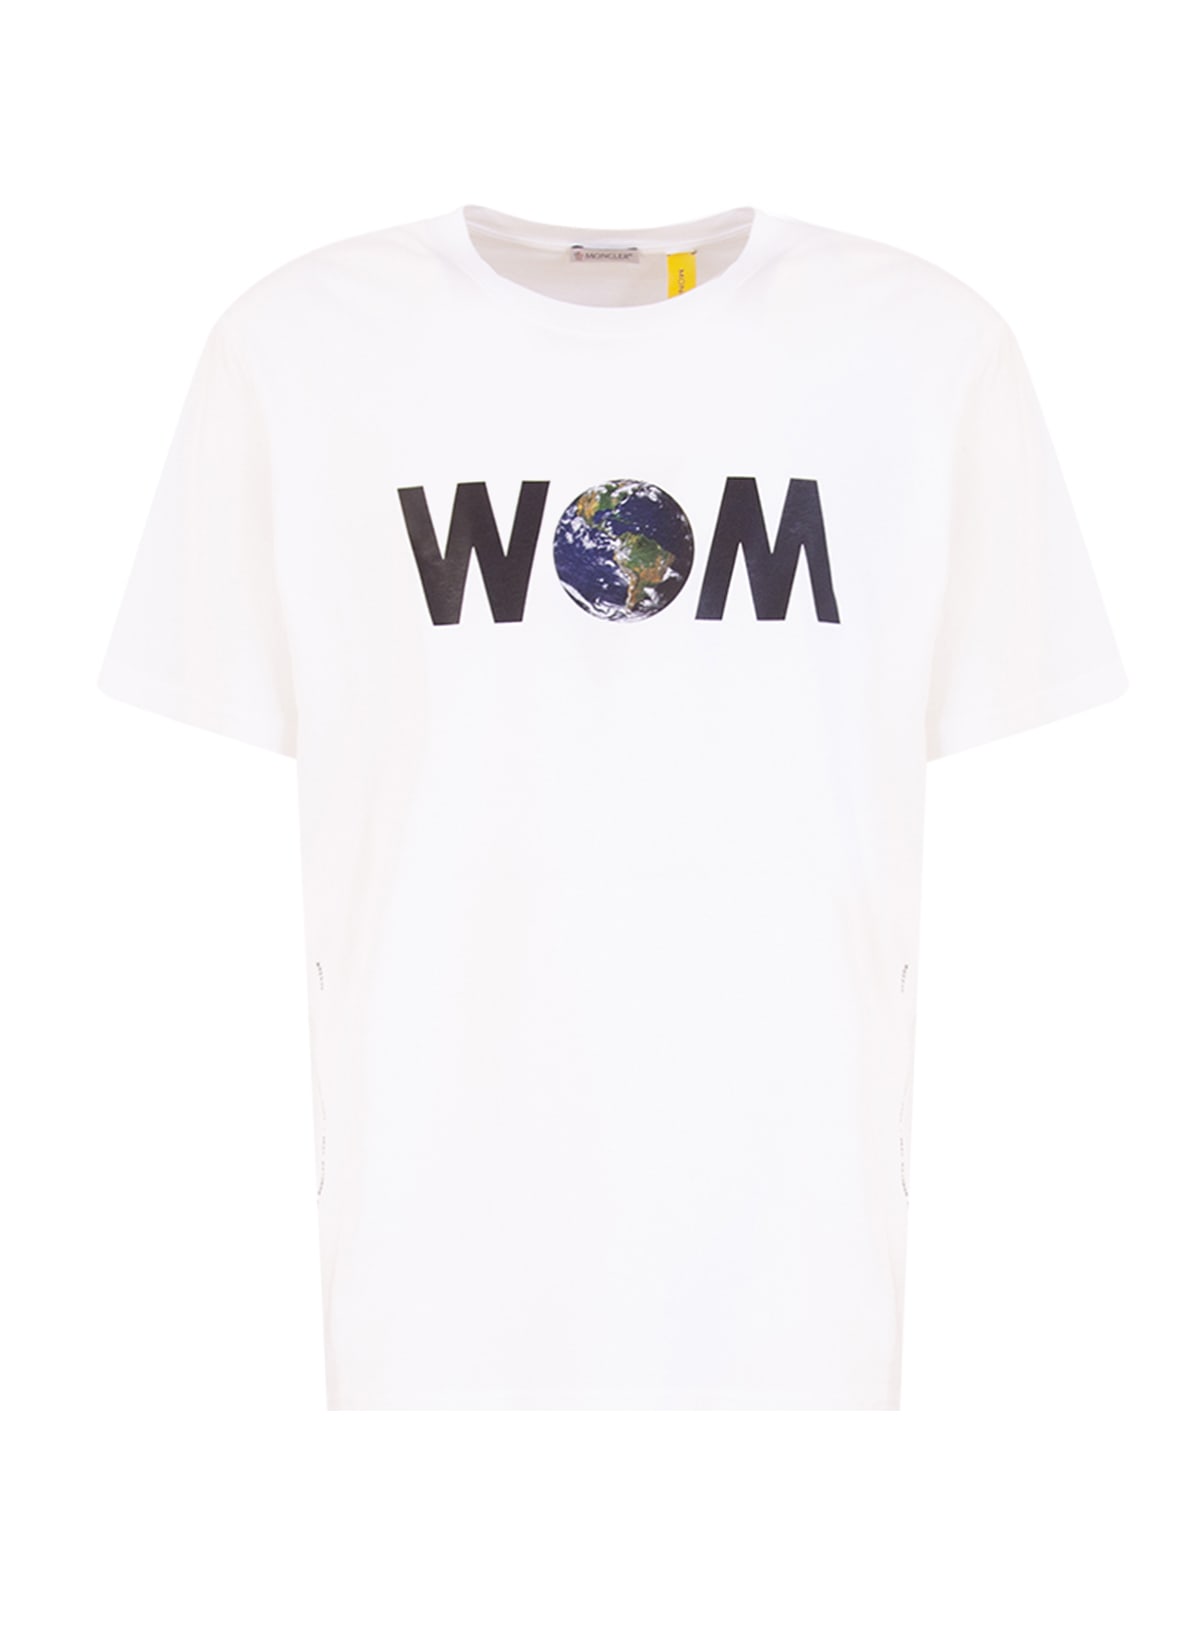 Moncler Genius World Of Moncler T-shirt